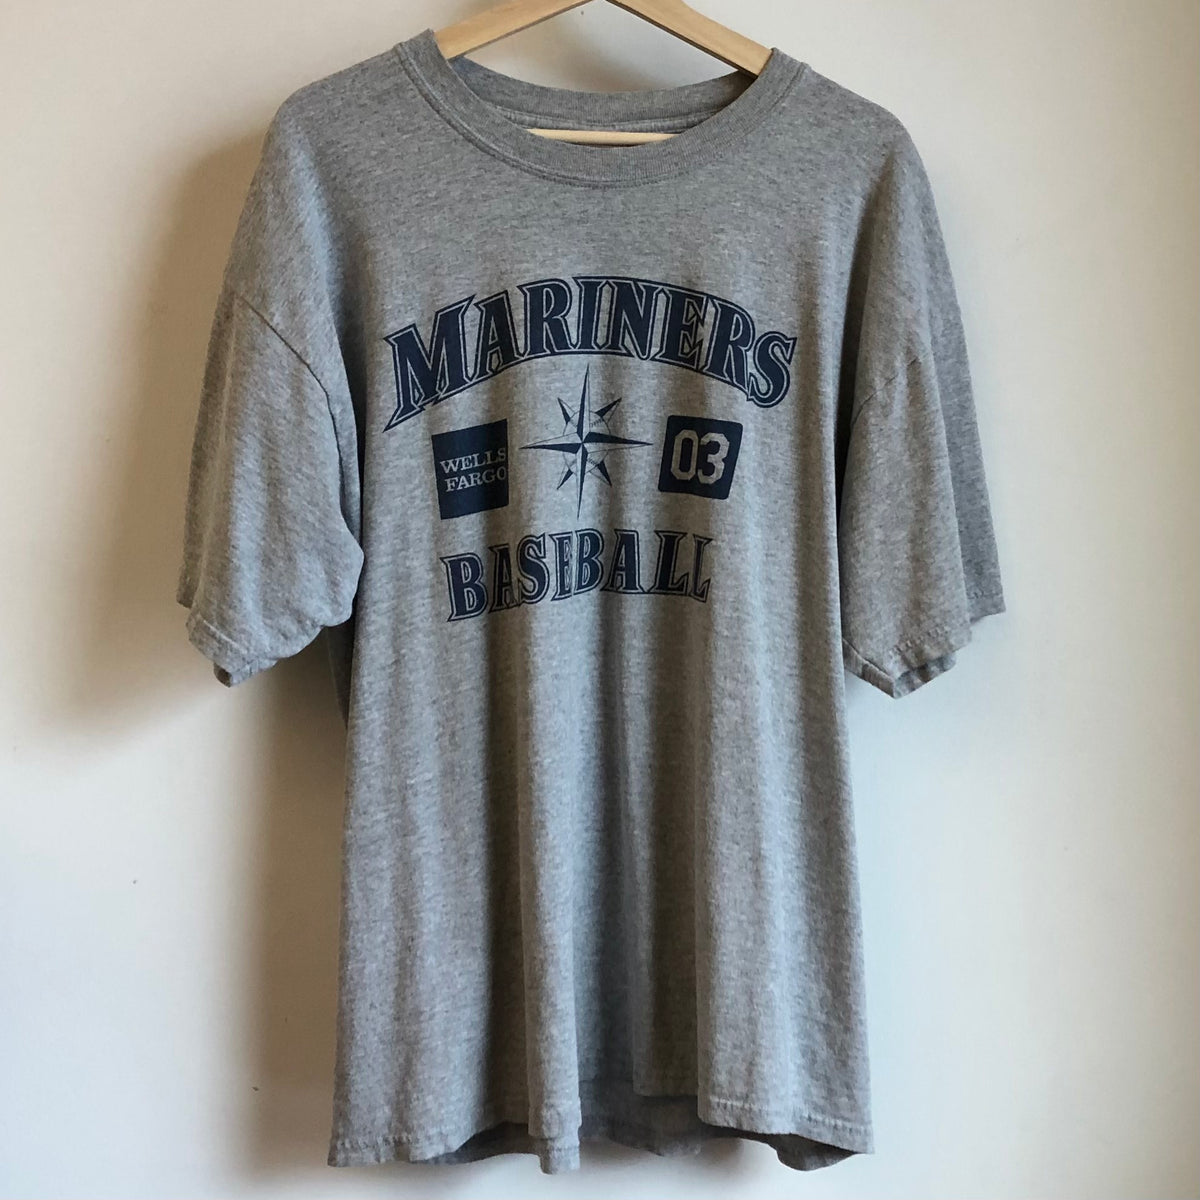 vintage mariners shirt